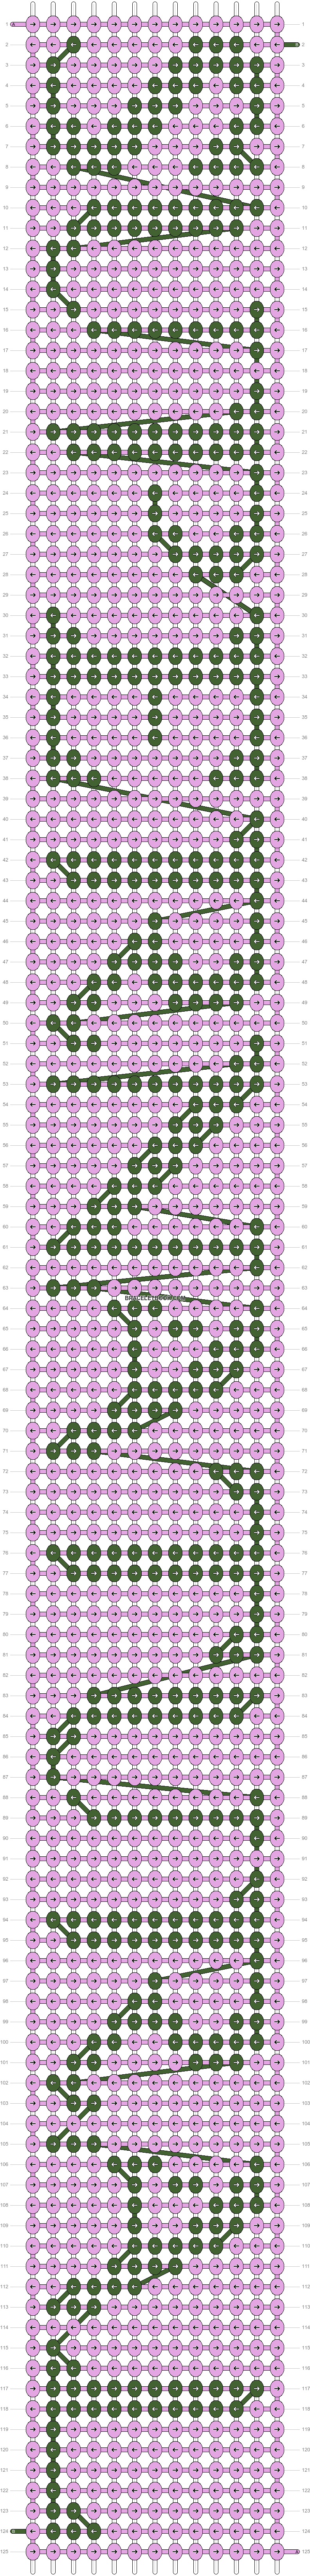 Alpha pattern #39461 variation #322444 pattern